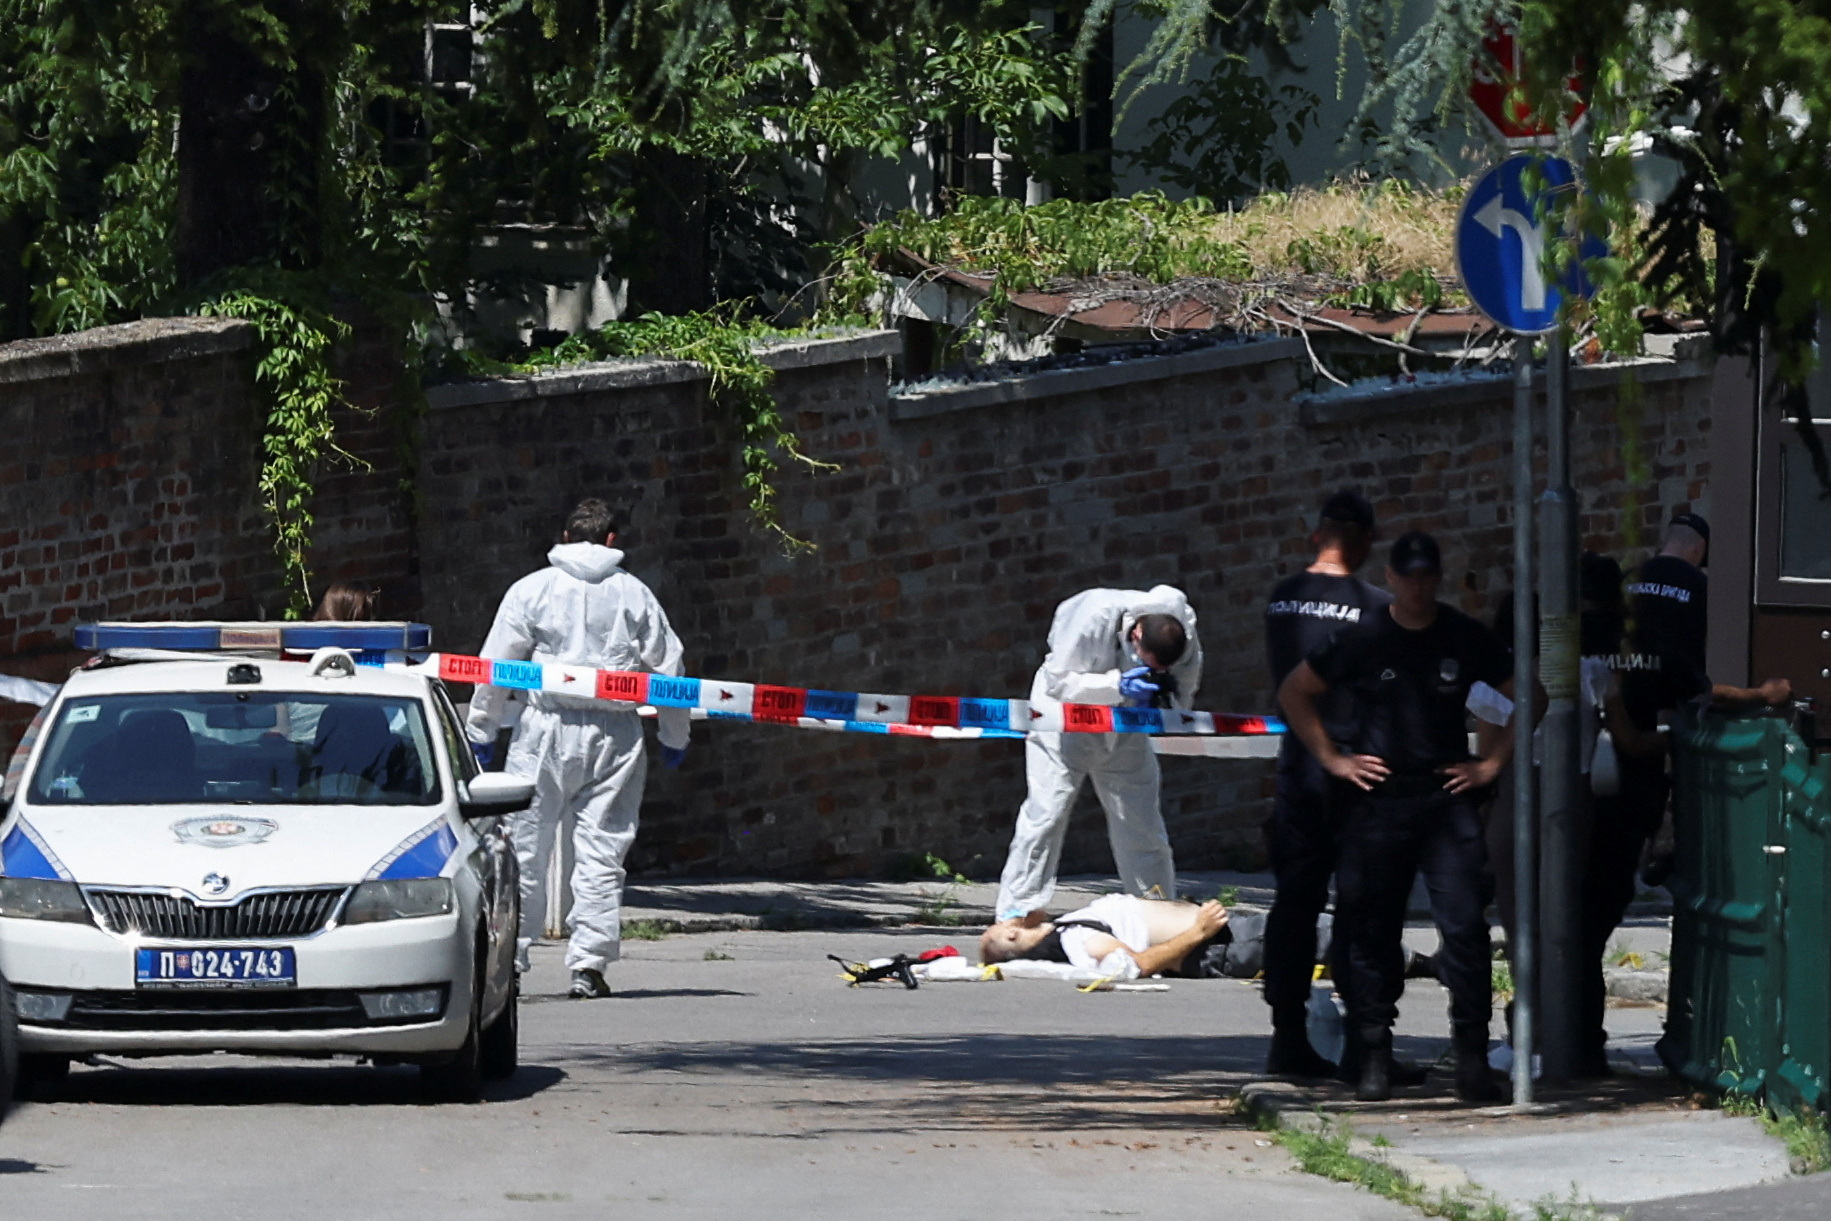 Shooting in front of Israeli embassy in Belgrade injures police officer